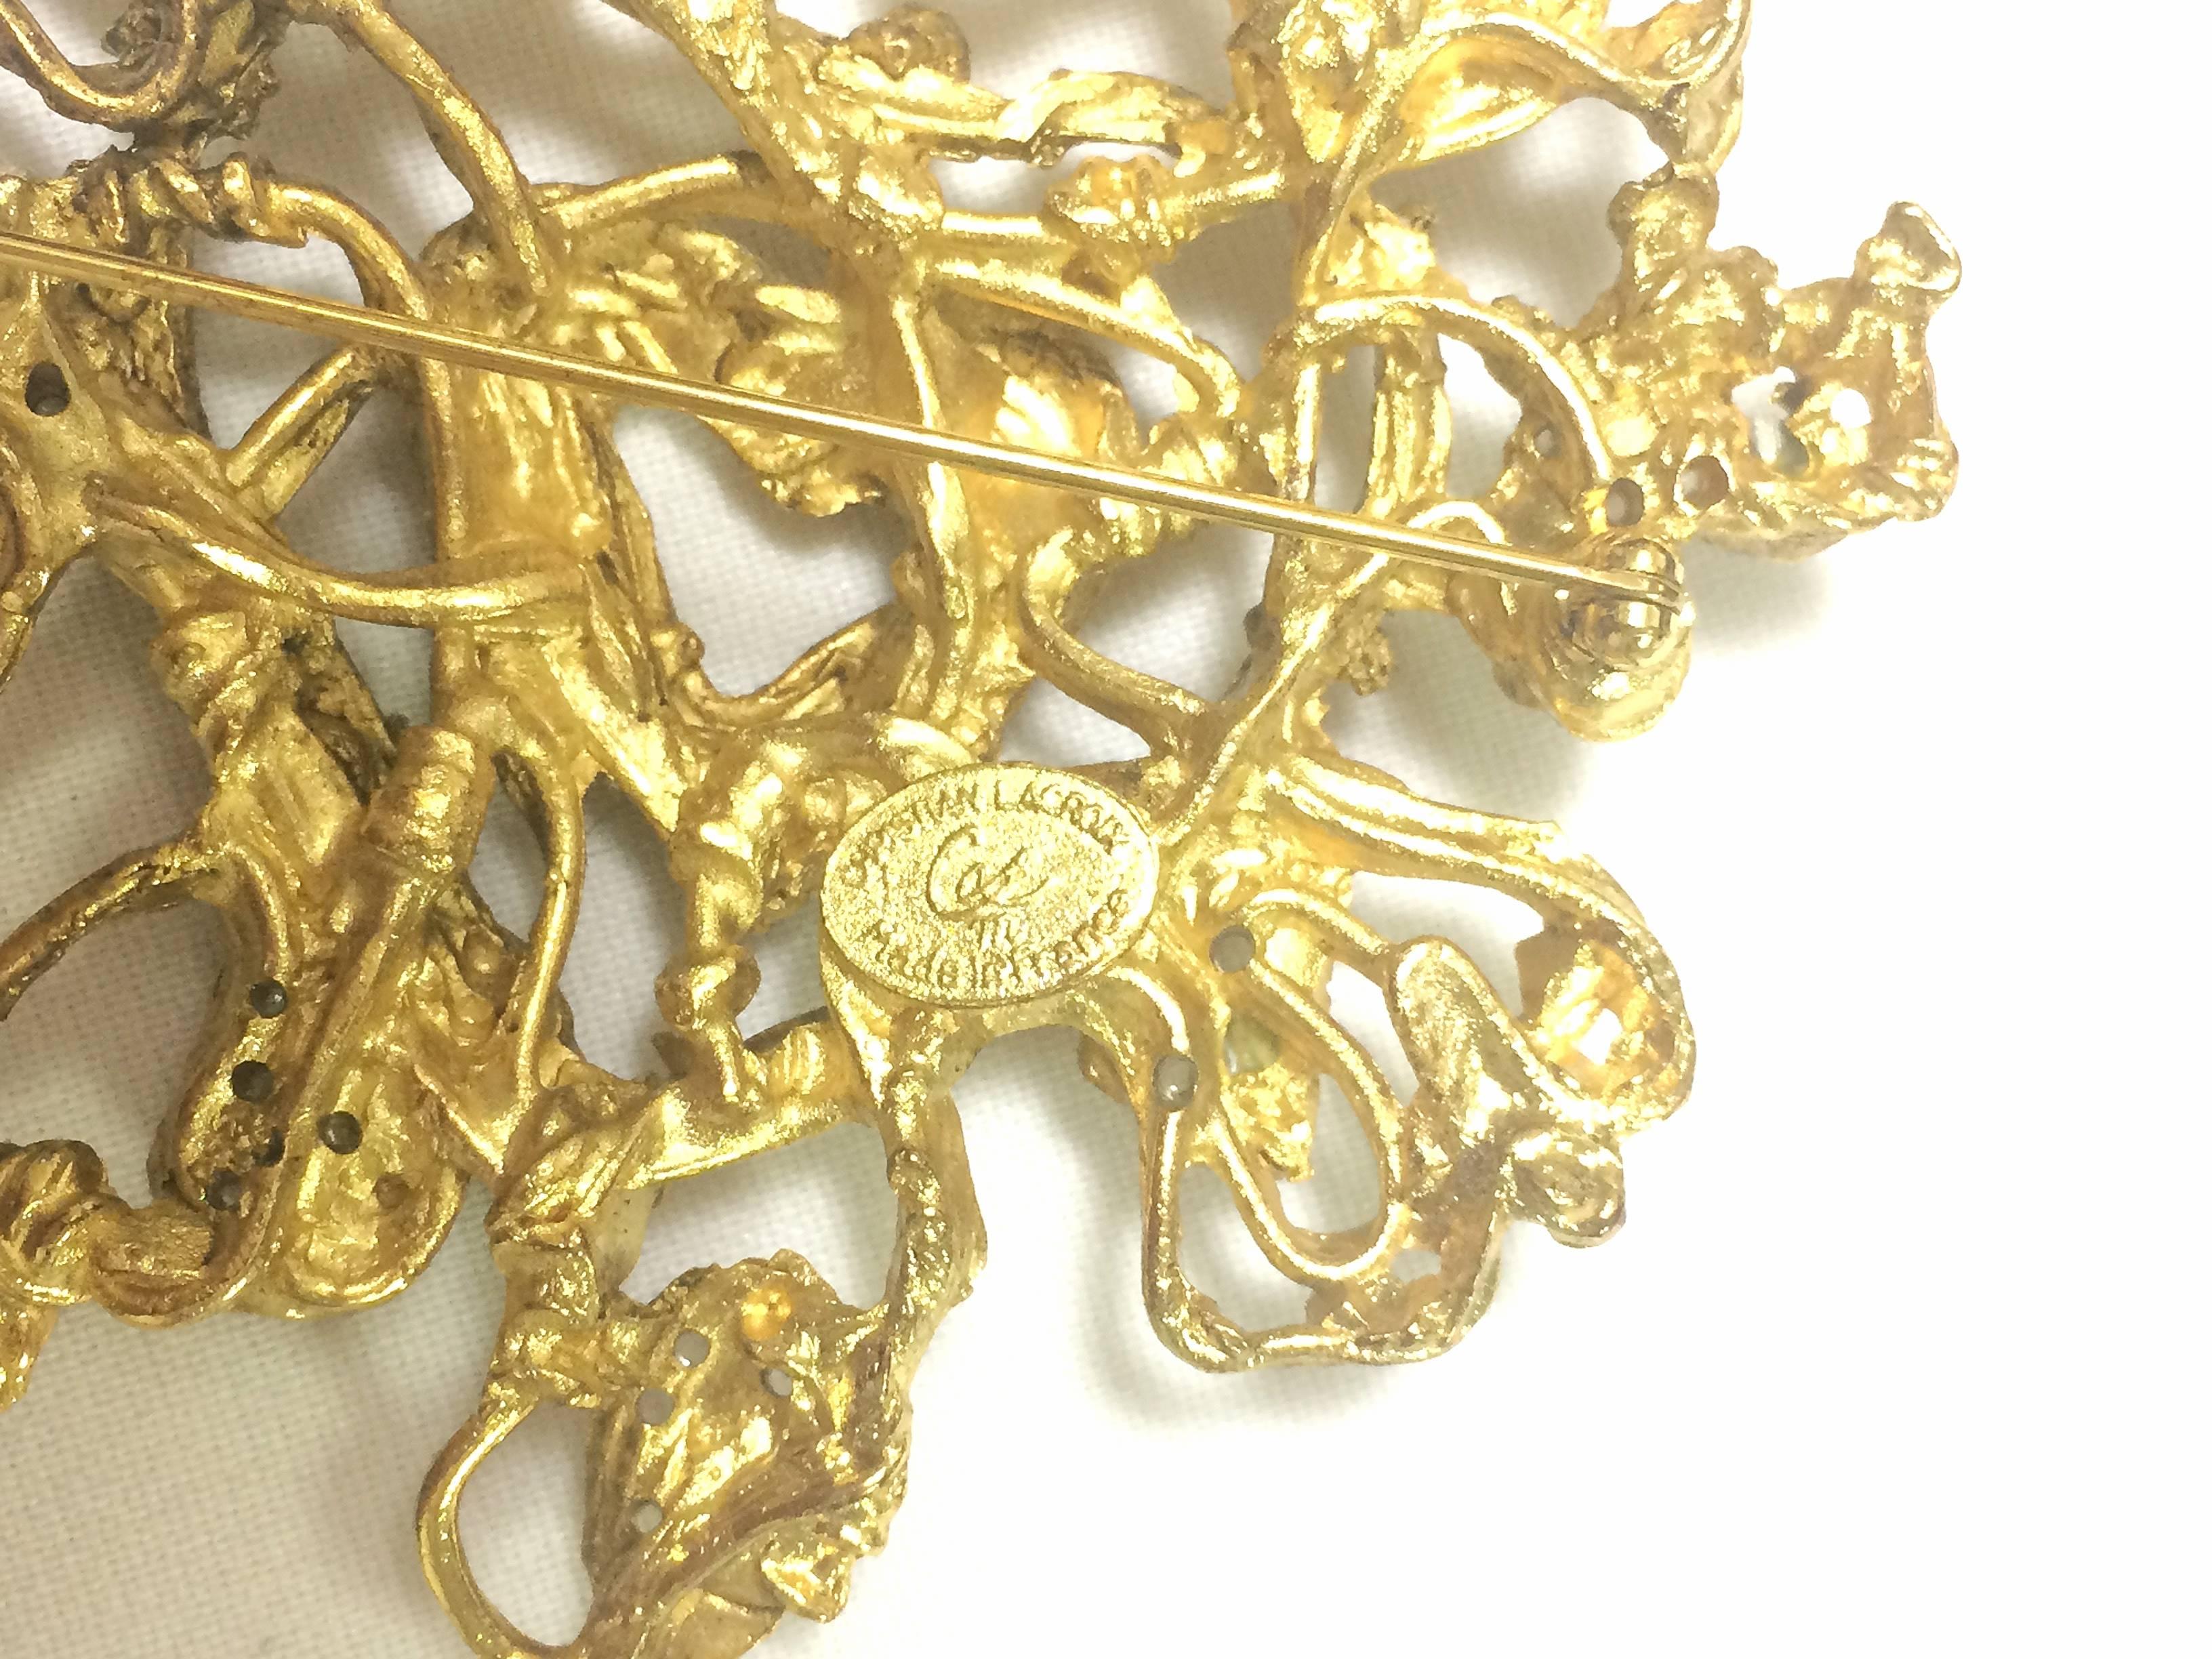 Vintage Christian Lacroix golden edwardian heart and arabesque design brooch For Sale 2